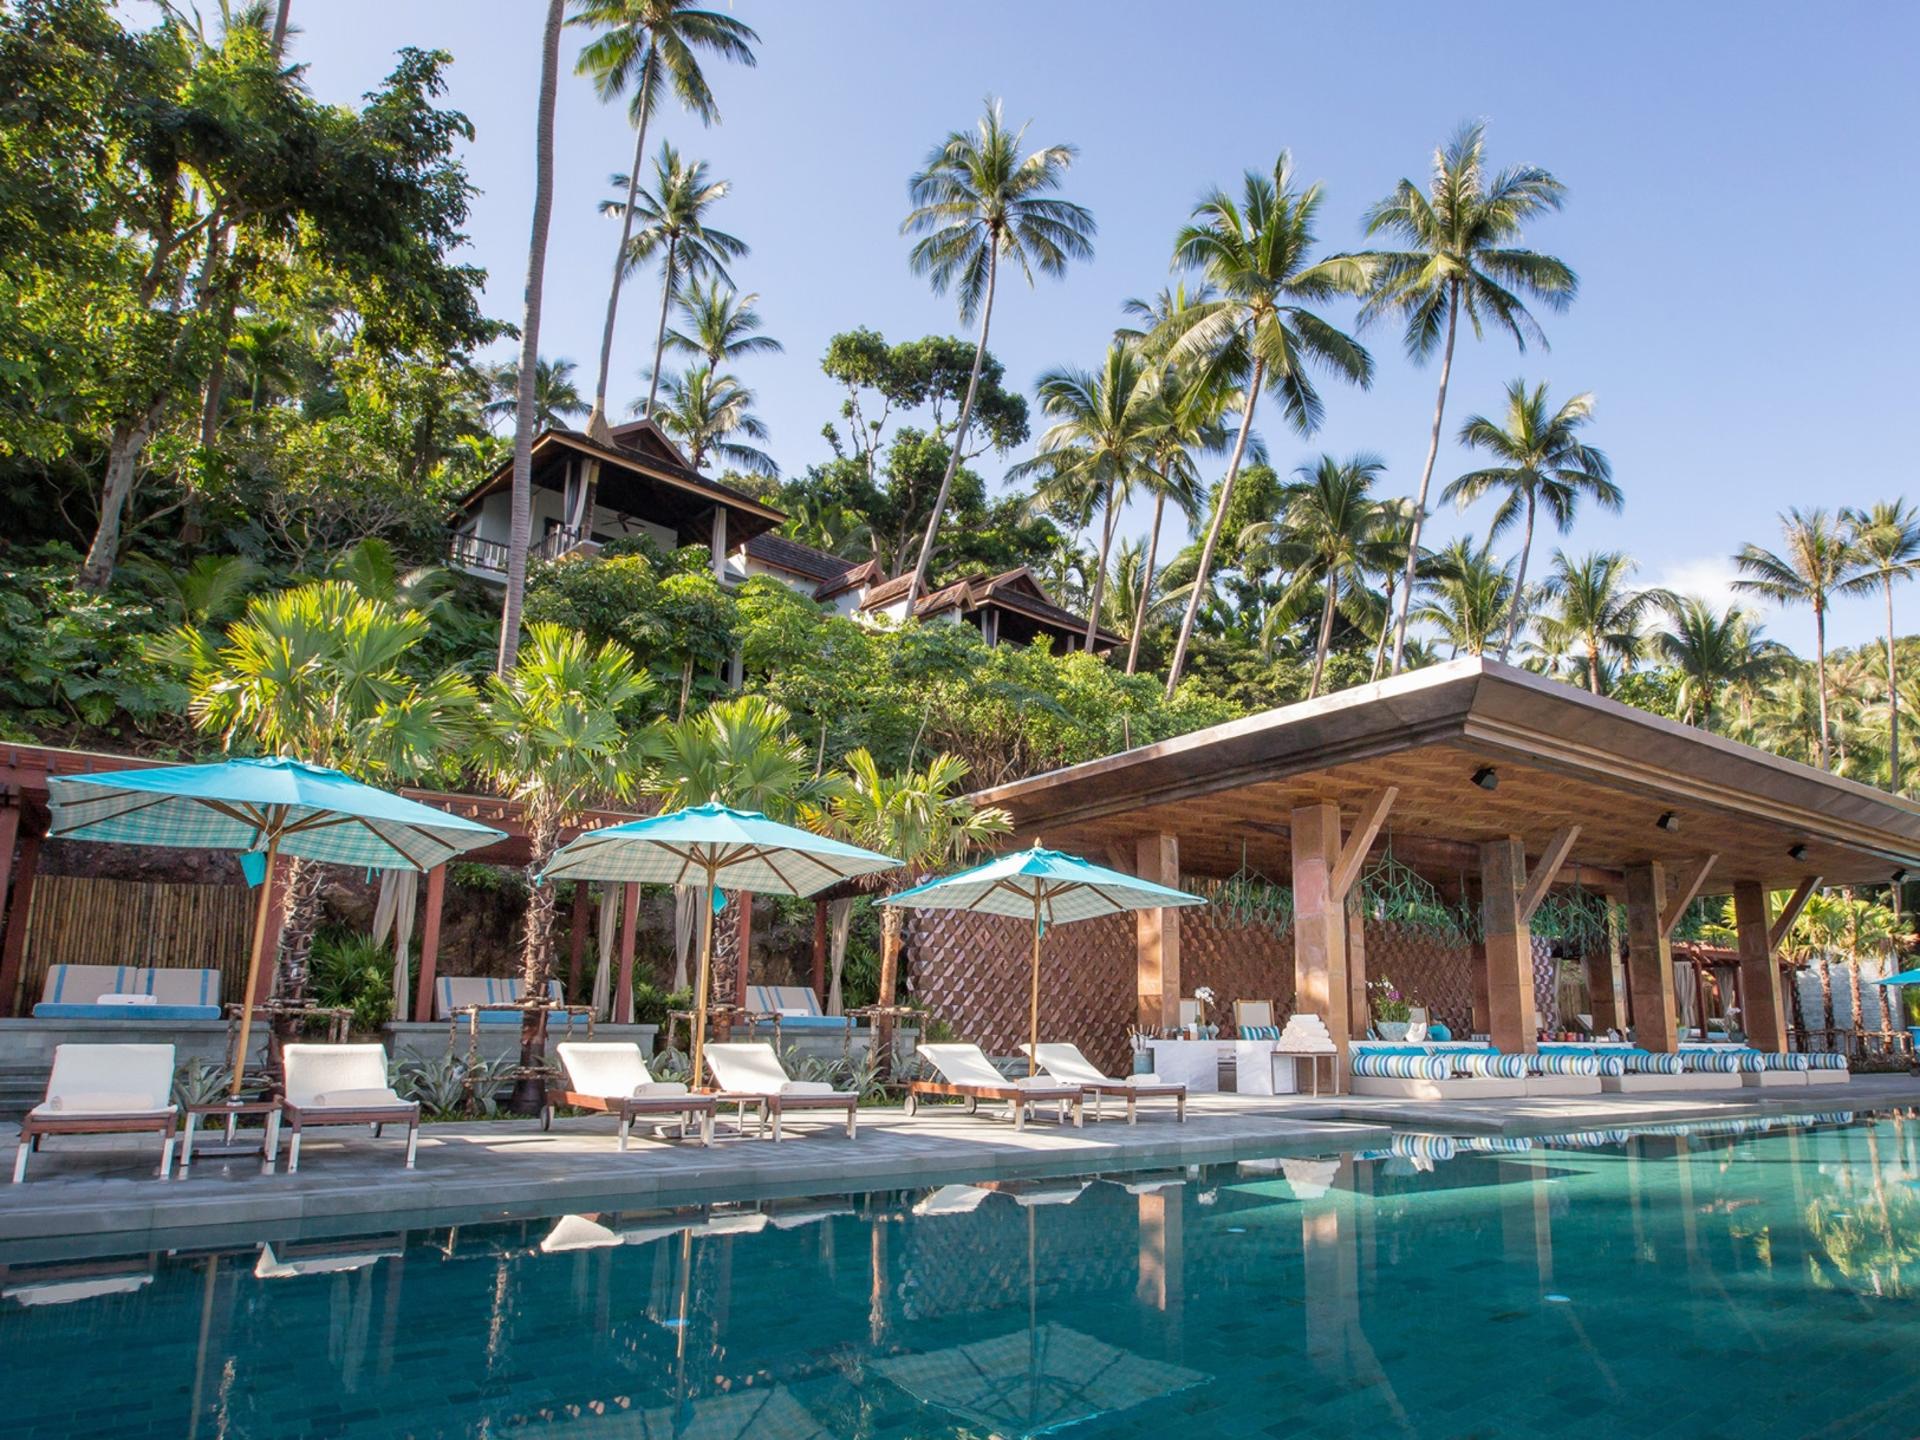 White Lotus Season 3 Filming Locations Revealed: Thailand's Four Seasons  and Anantara Resorts